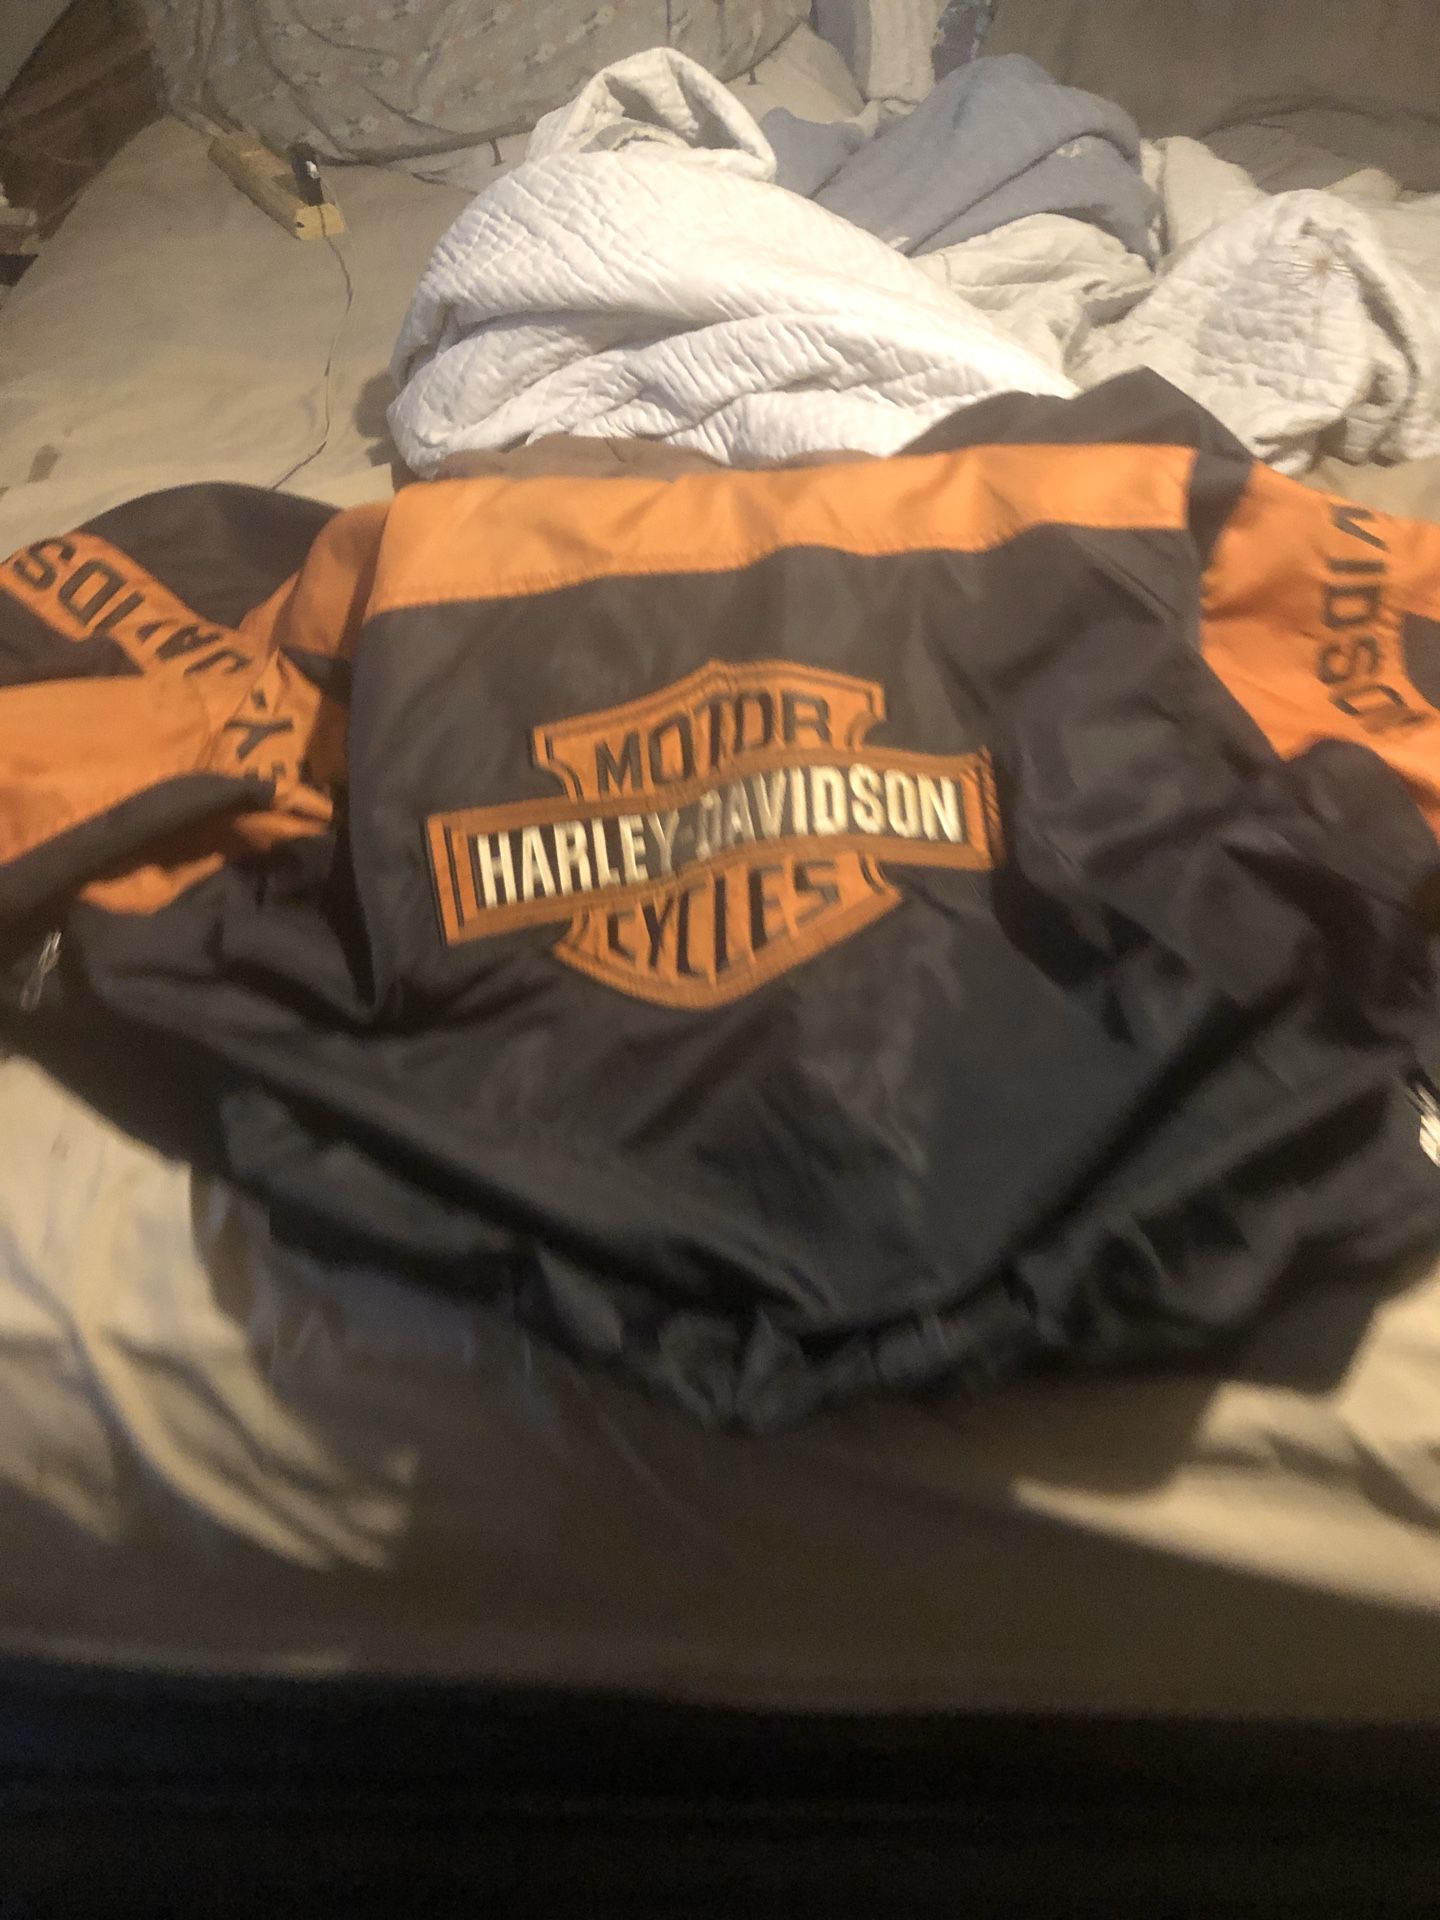 Harley Davidson biker jacket great condition